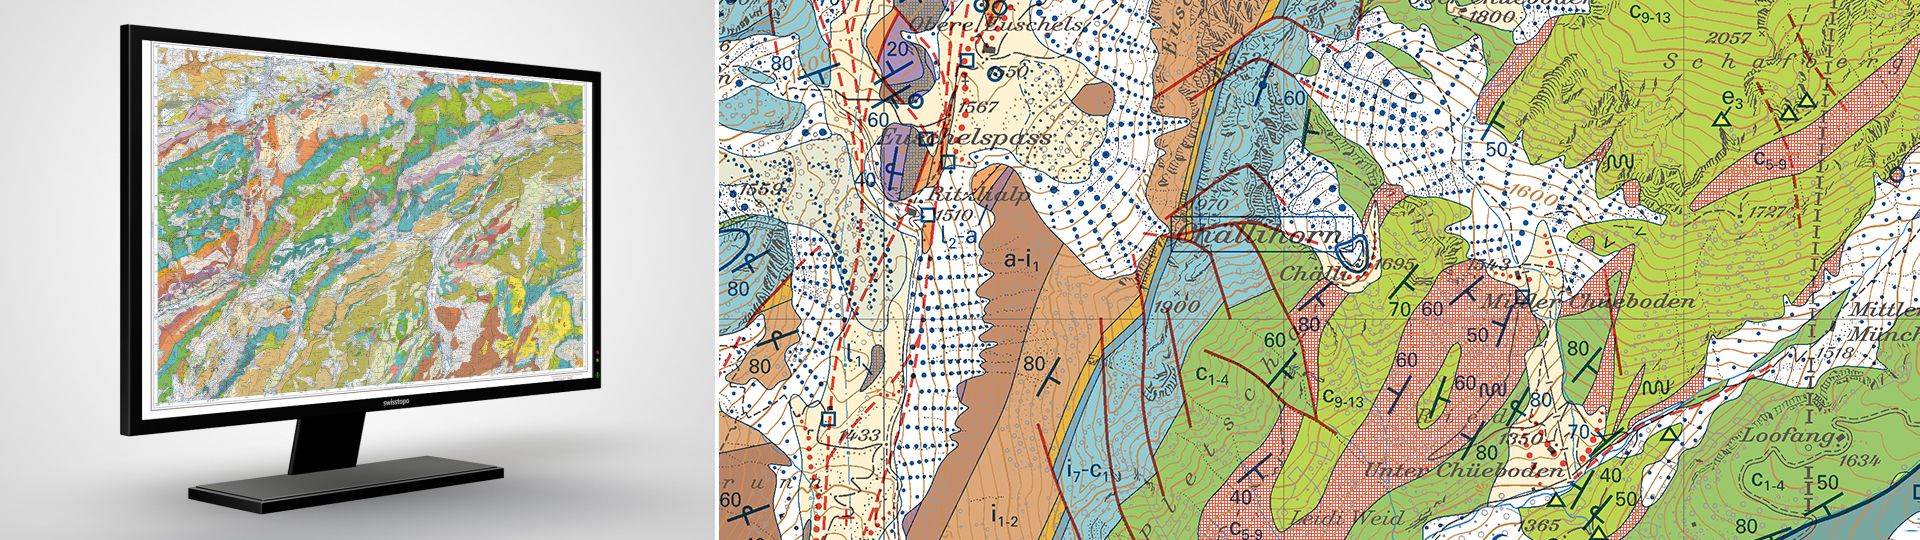 Cartes géologiques digitales: carte pixel avec notice explicative